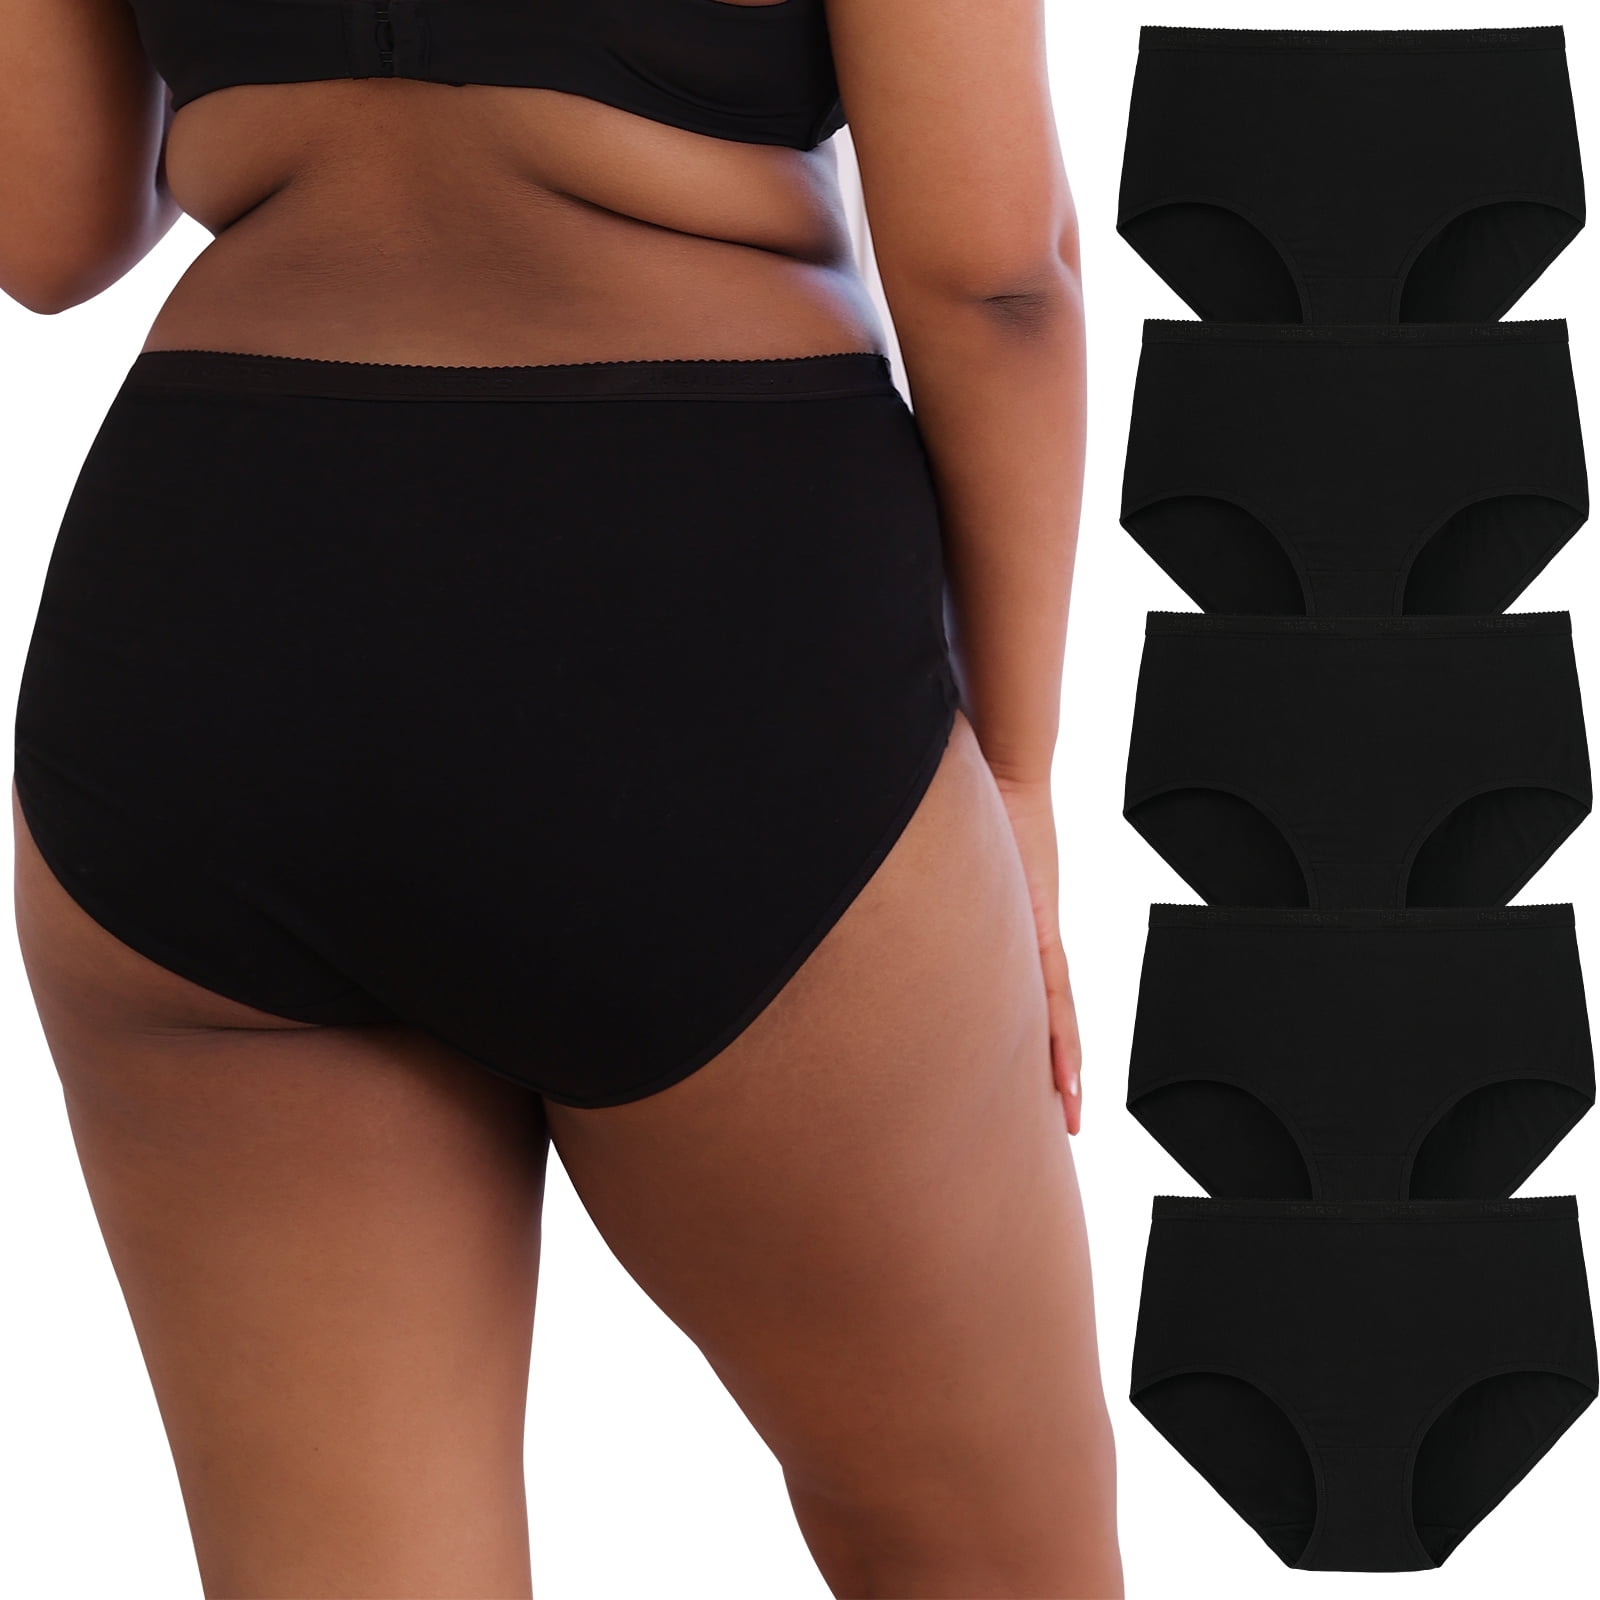 INNERSY Women's Plus Size XL-5XL Cotton Underwear High Waisted Stretchy Briefs 5-Pack(XL,Black)